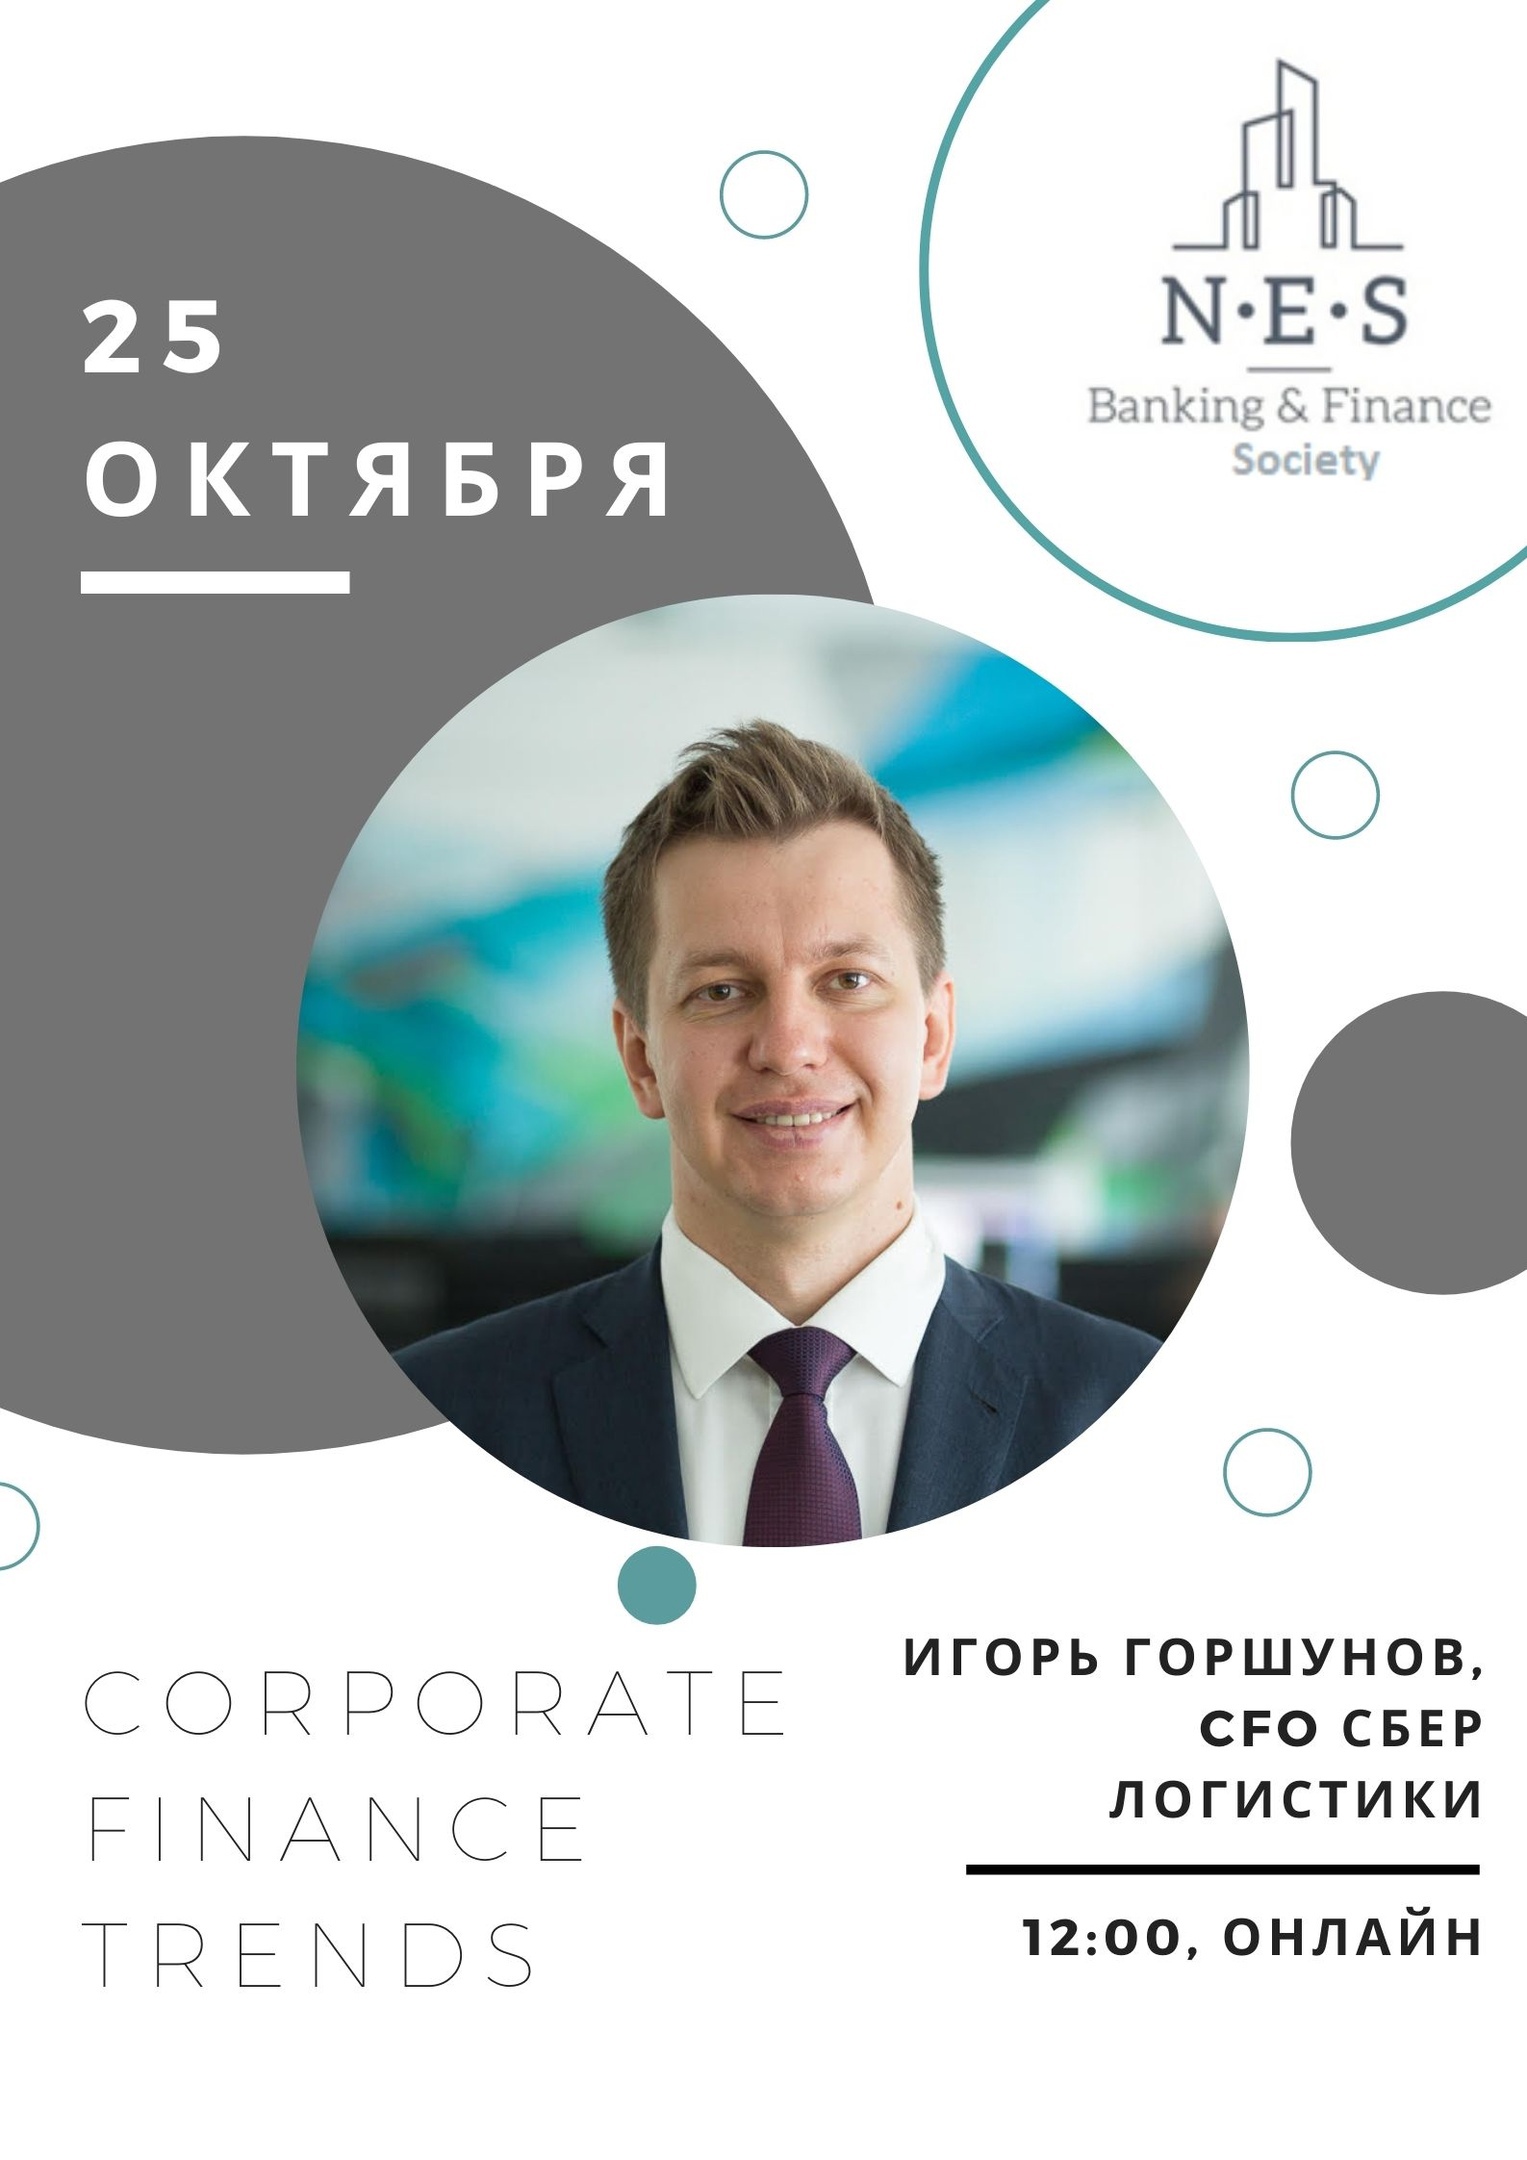 Igor Gorshunov – Chief Financial Officer at SBER Logistics